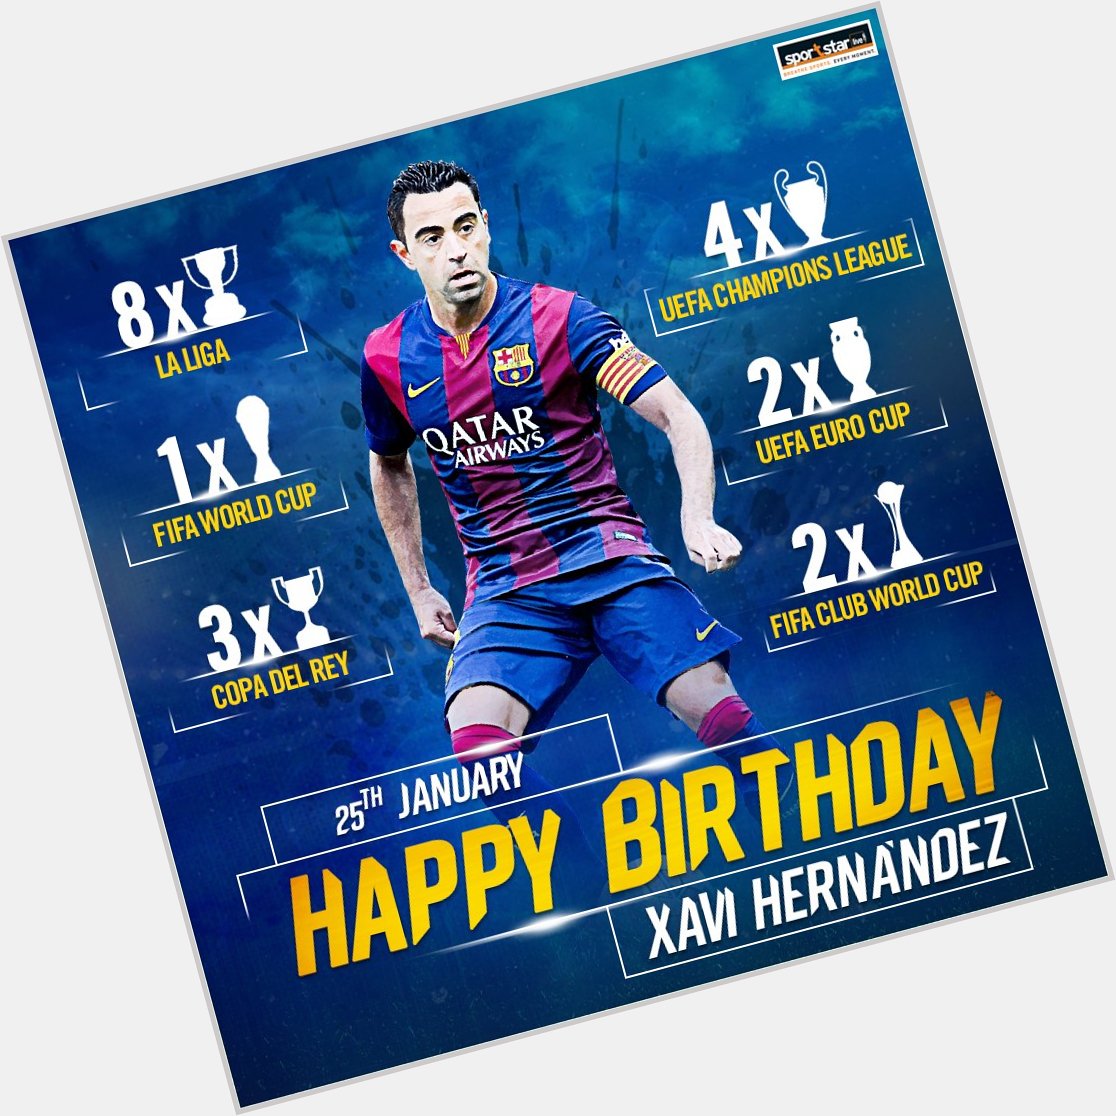 Here s wishing the midfield maestro Xavi Hernandez a very happy birthday! 